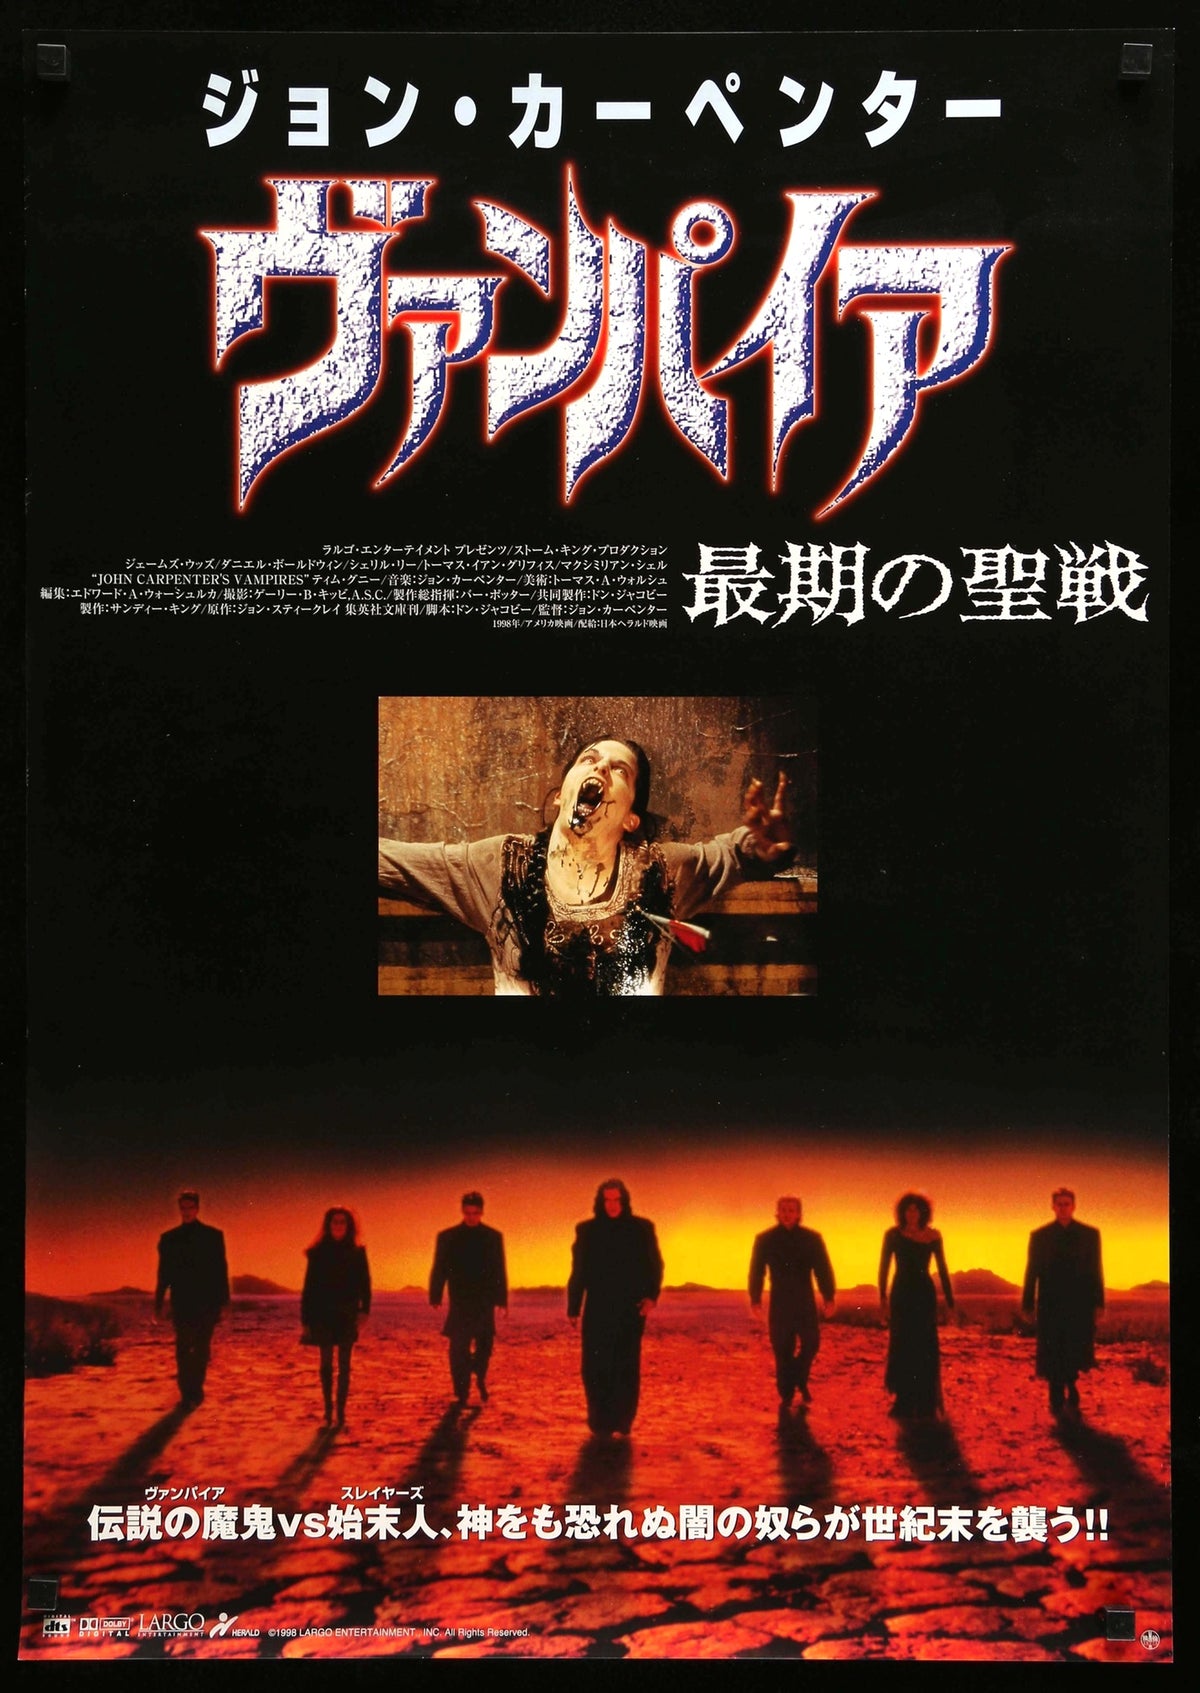 Vampires (1998) original movie poster for sale at Original Film Art